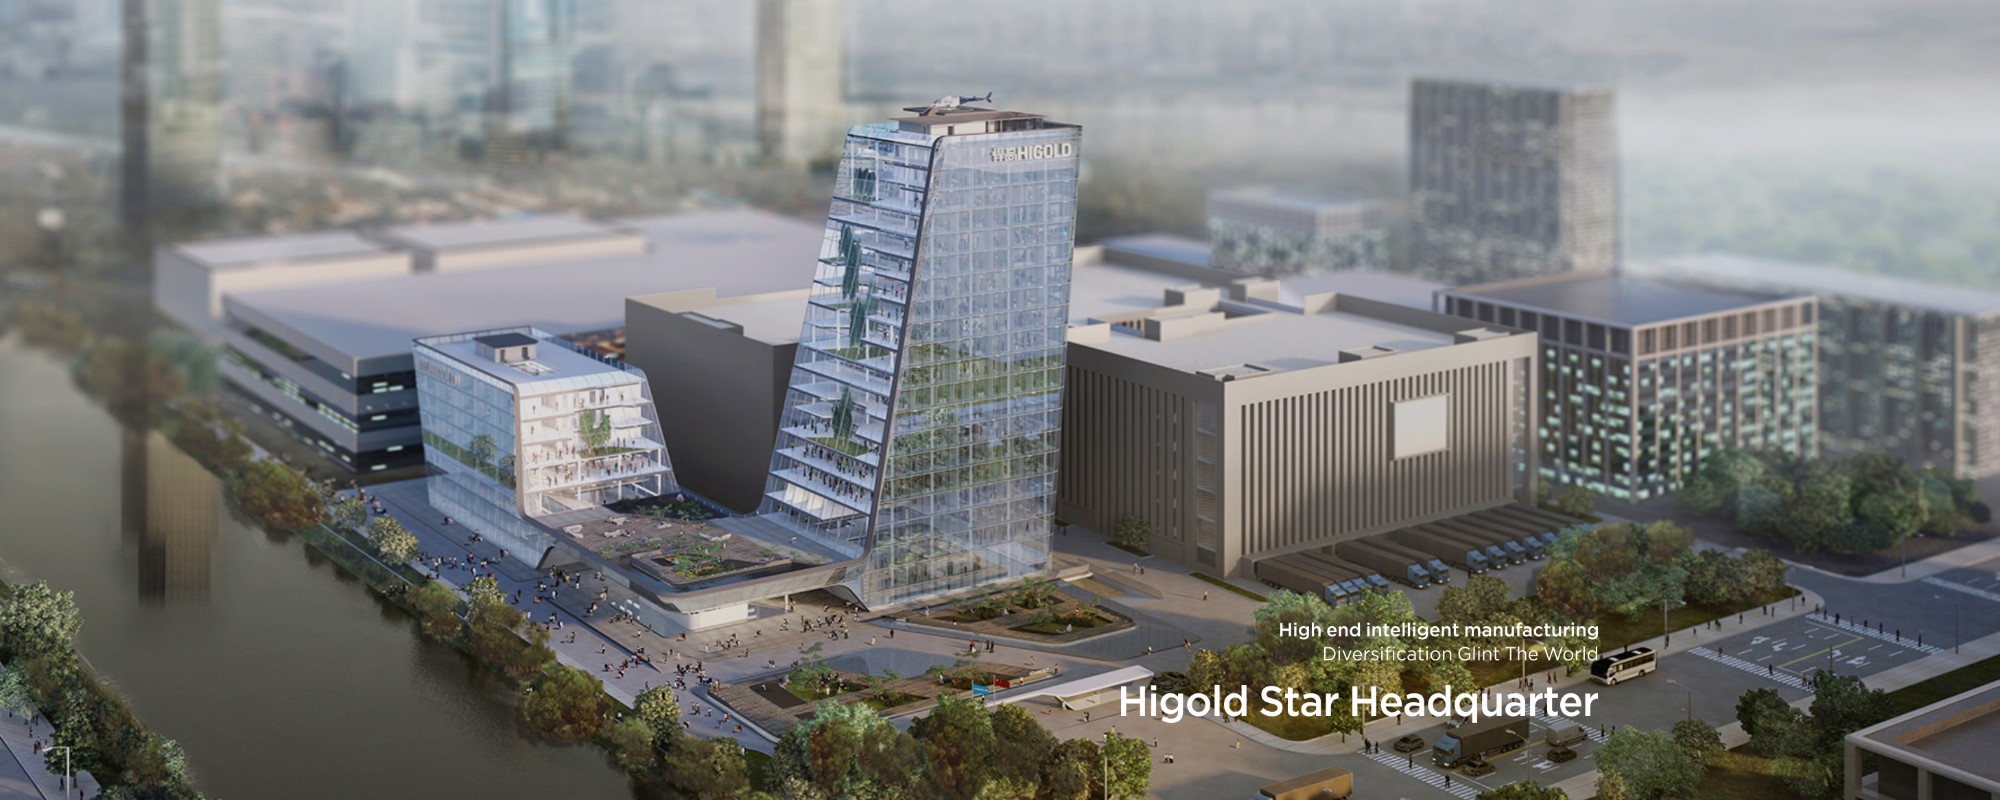 Higold Star Headquarter